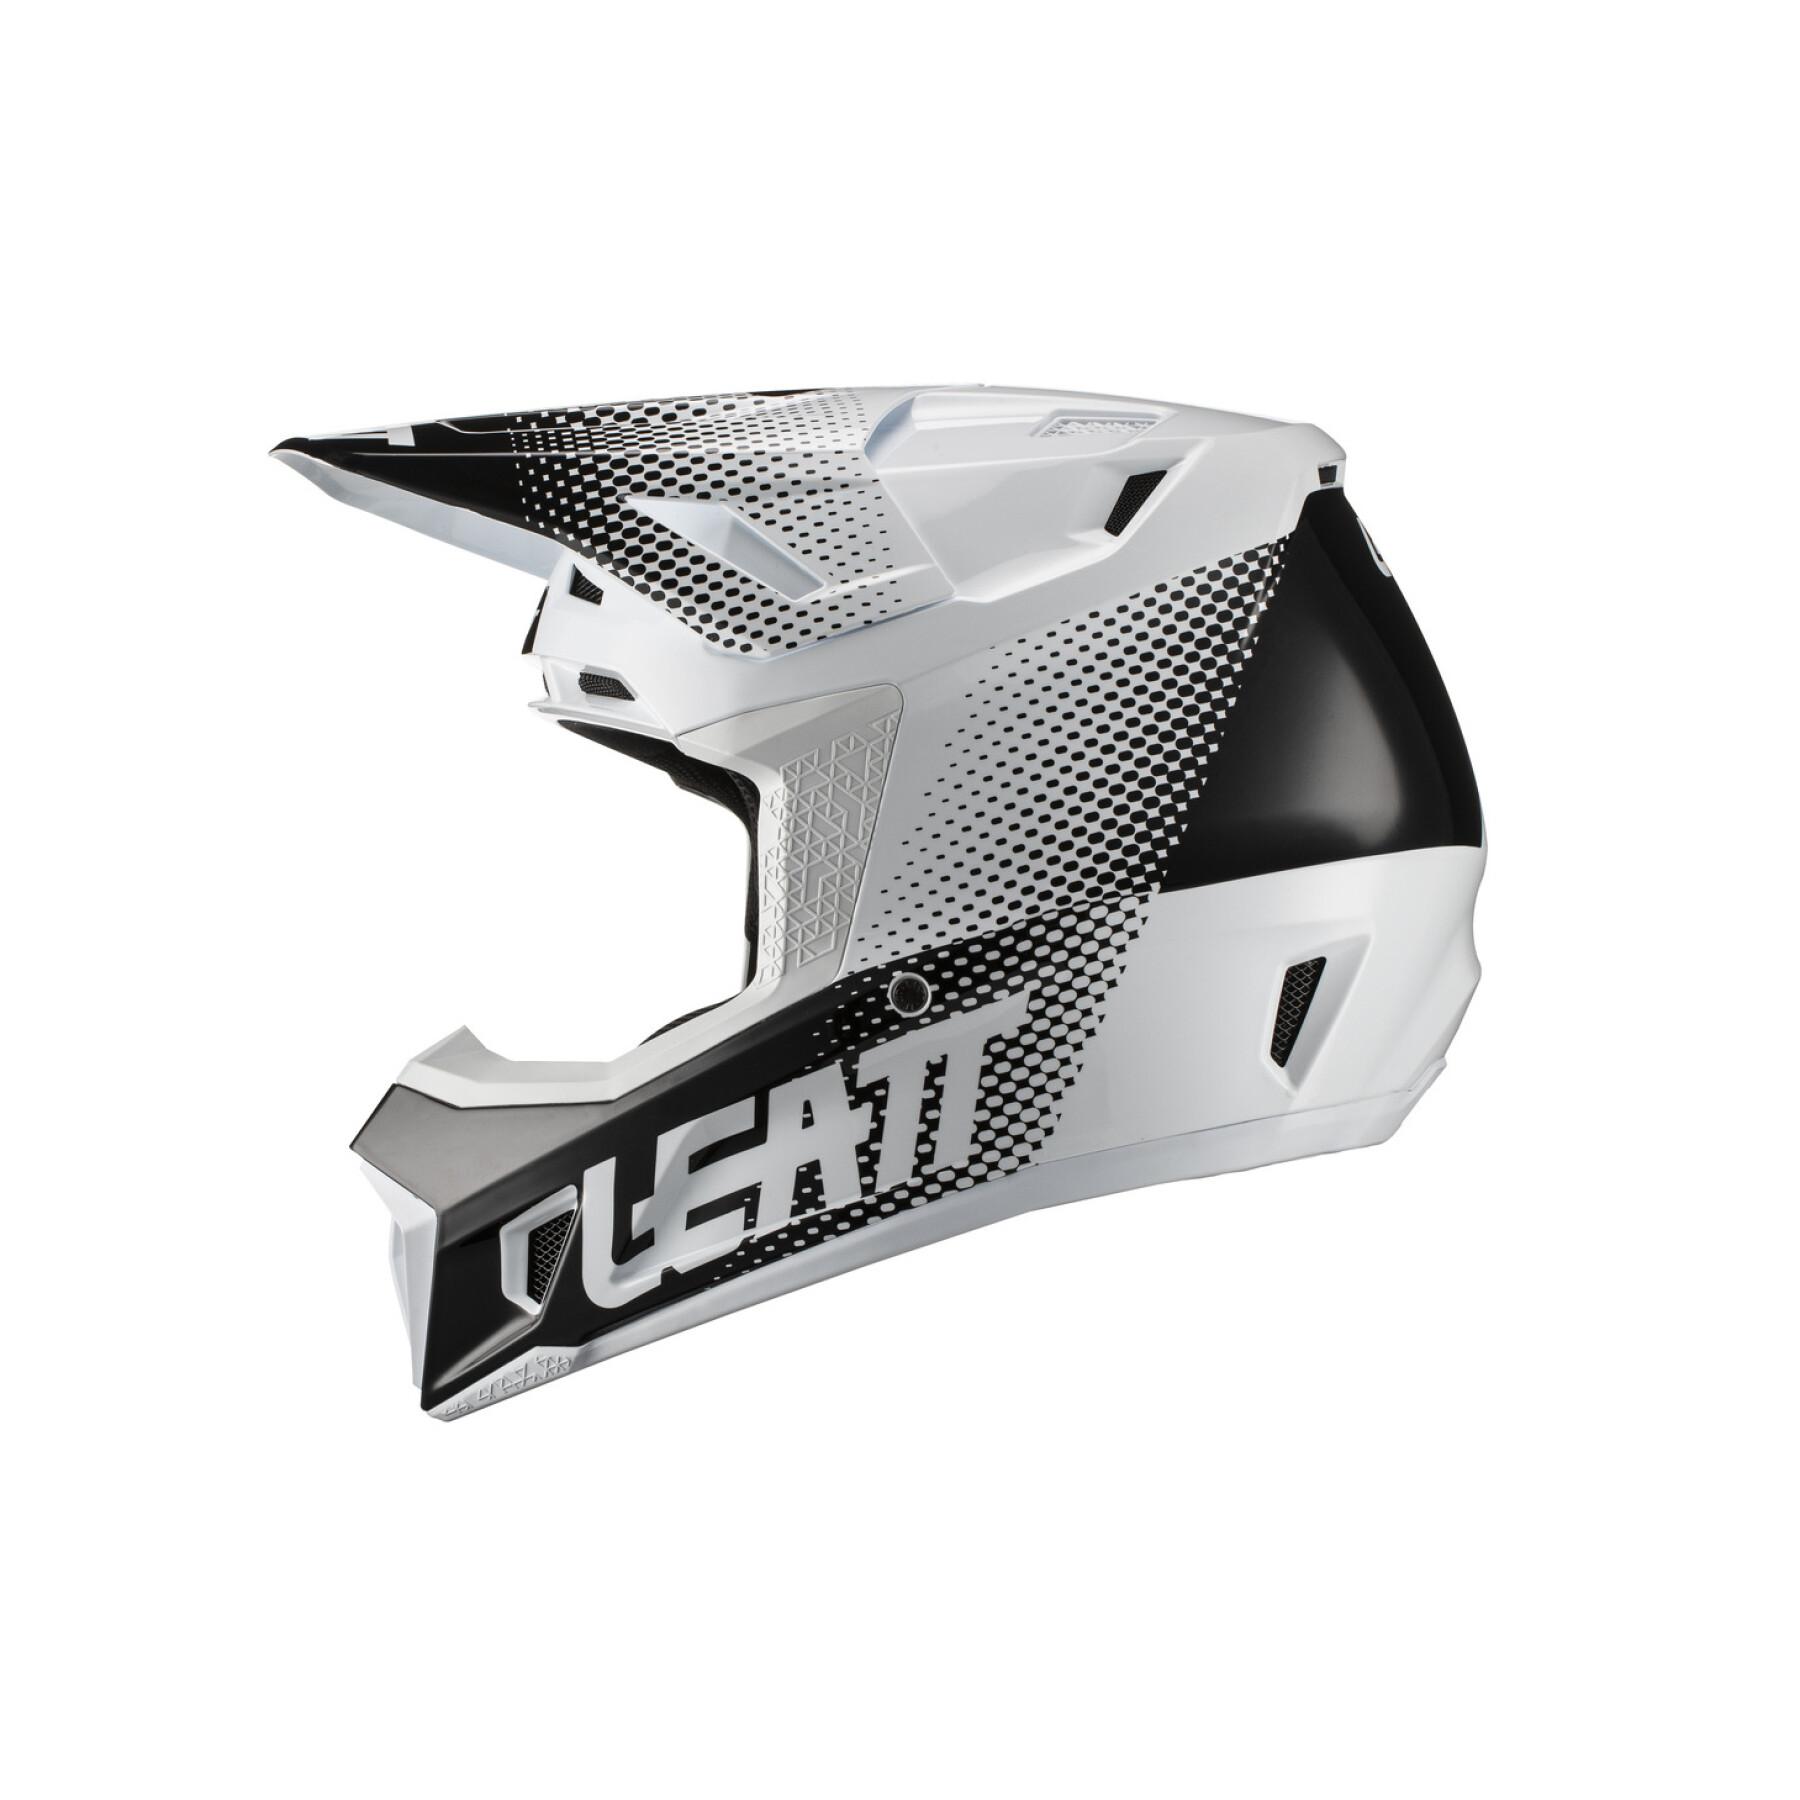 Casco de moto con gafas incluidas Leatt 7.5 V21.1